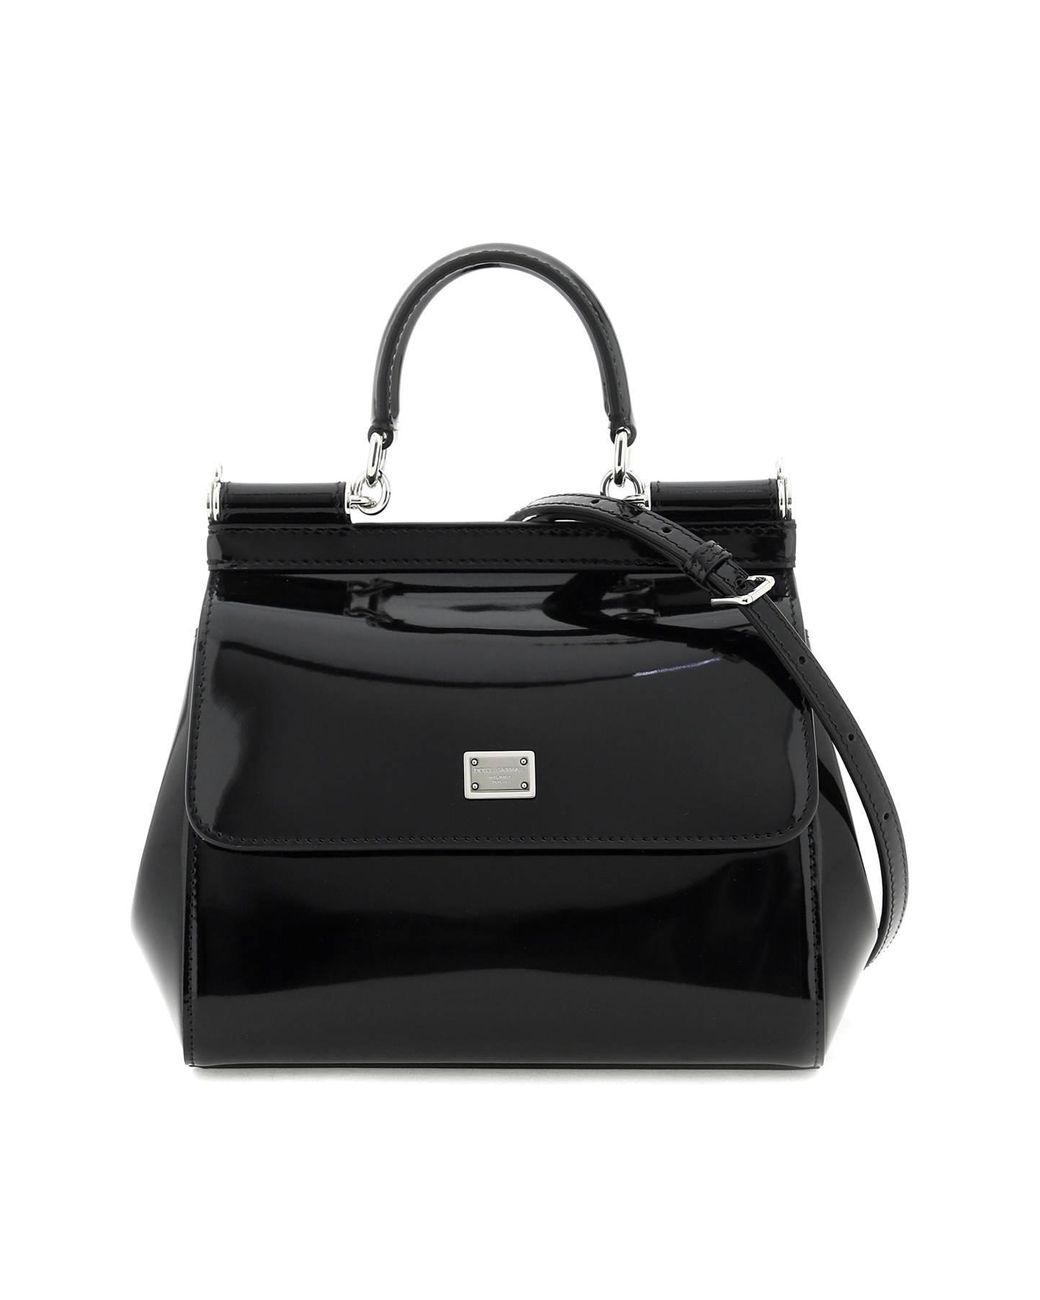 Dolce & Gabbana Patent Leather 'sicily' Handbag in Black | Lyst